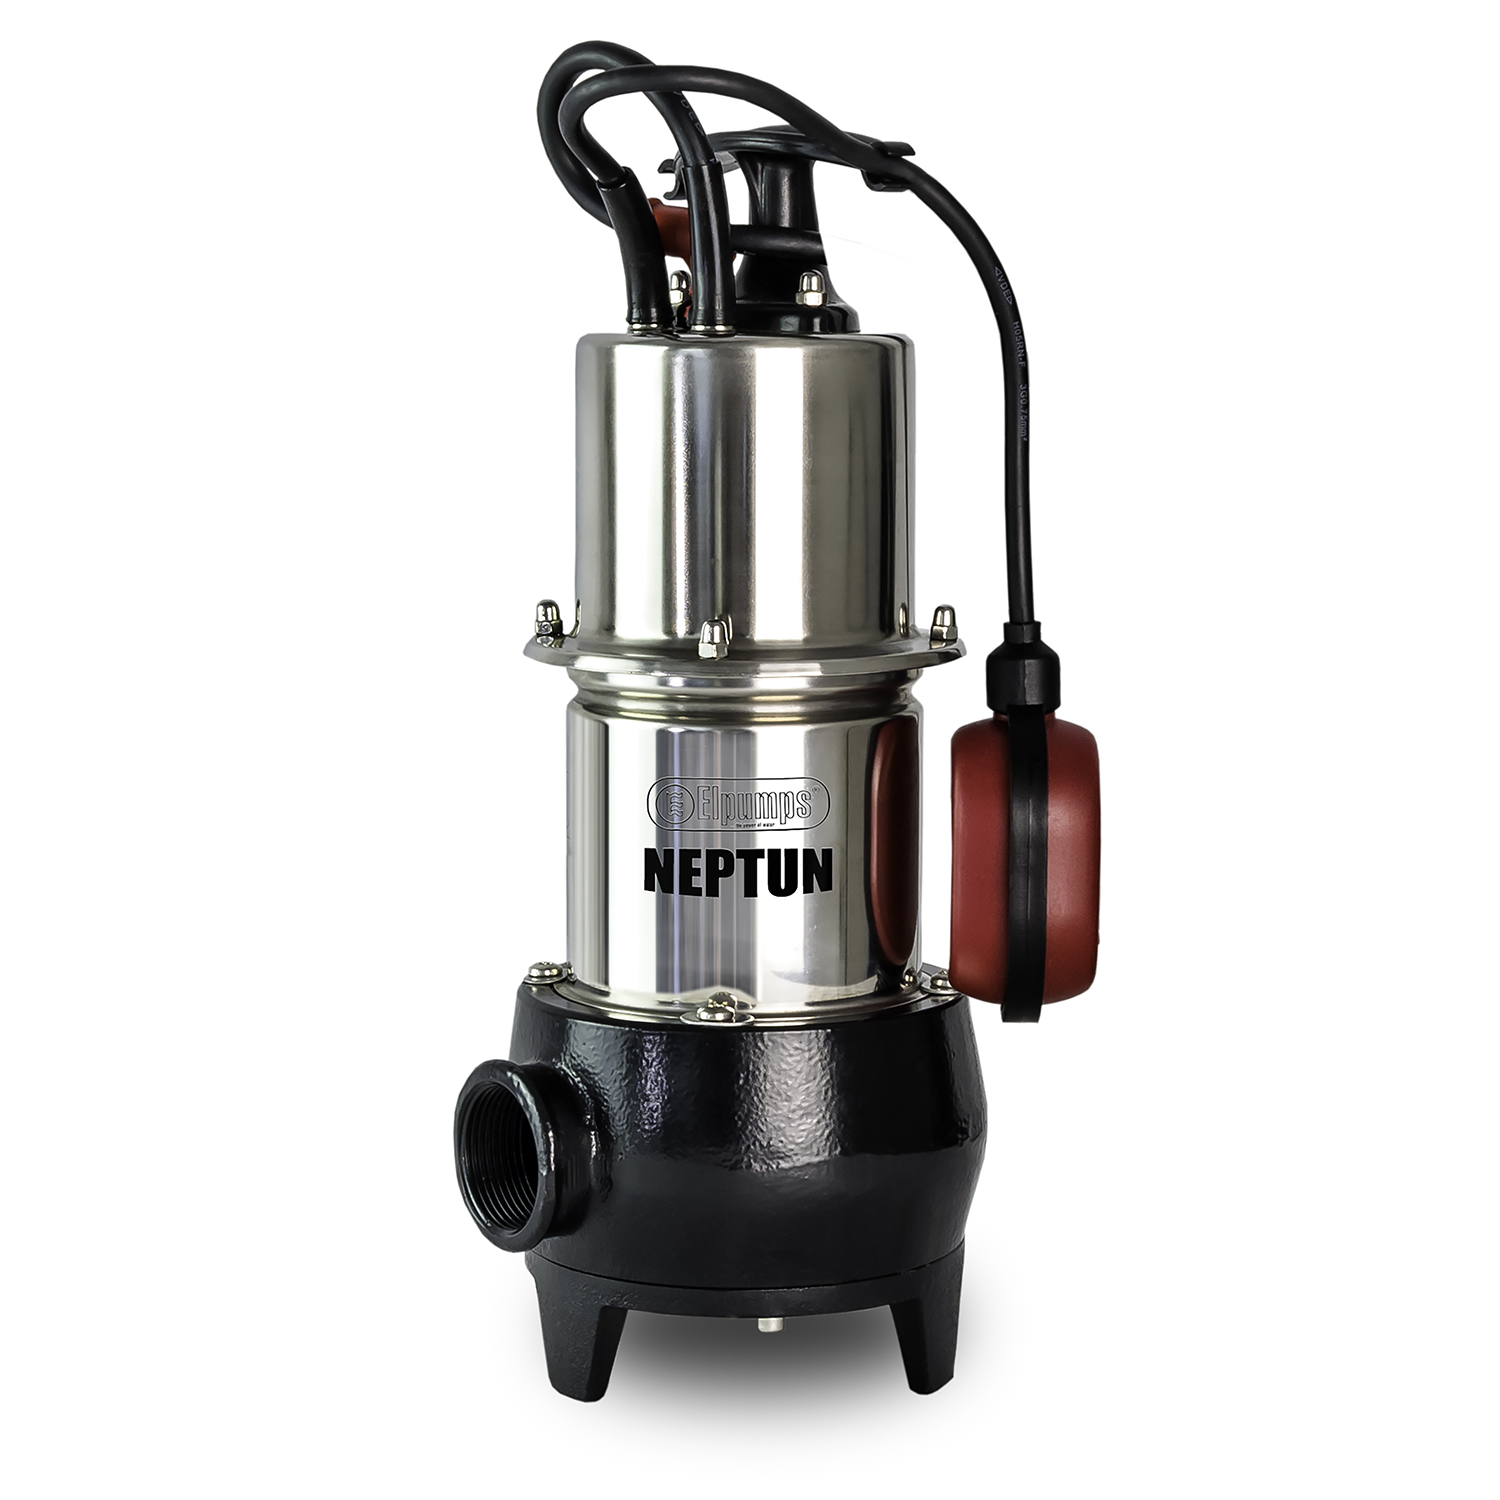 NEPTUN Free-flow (Vortex) submersible pumps for sewage